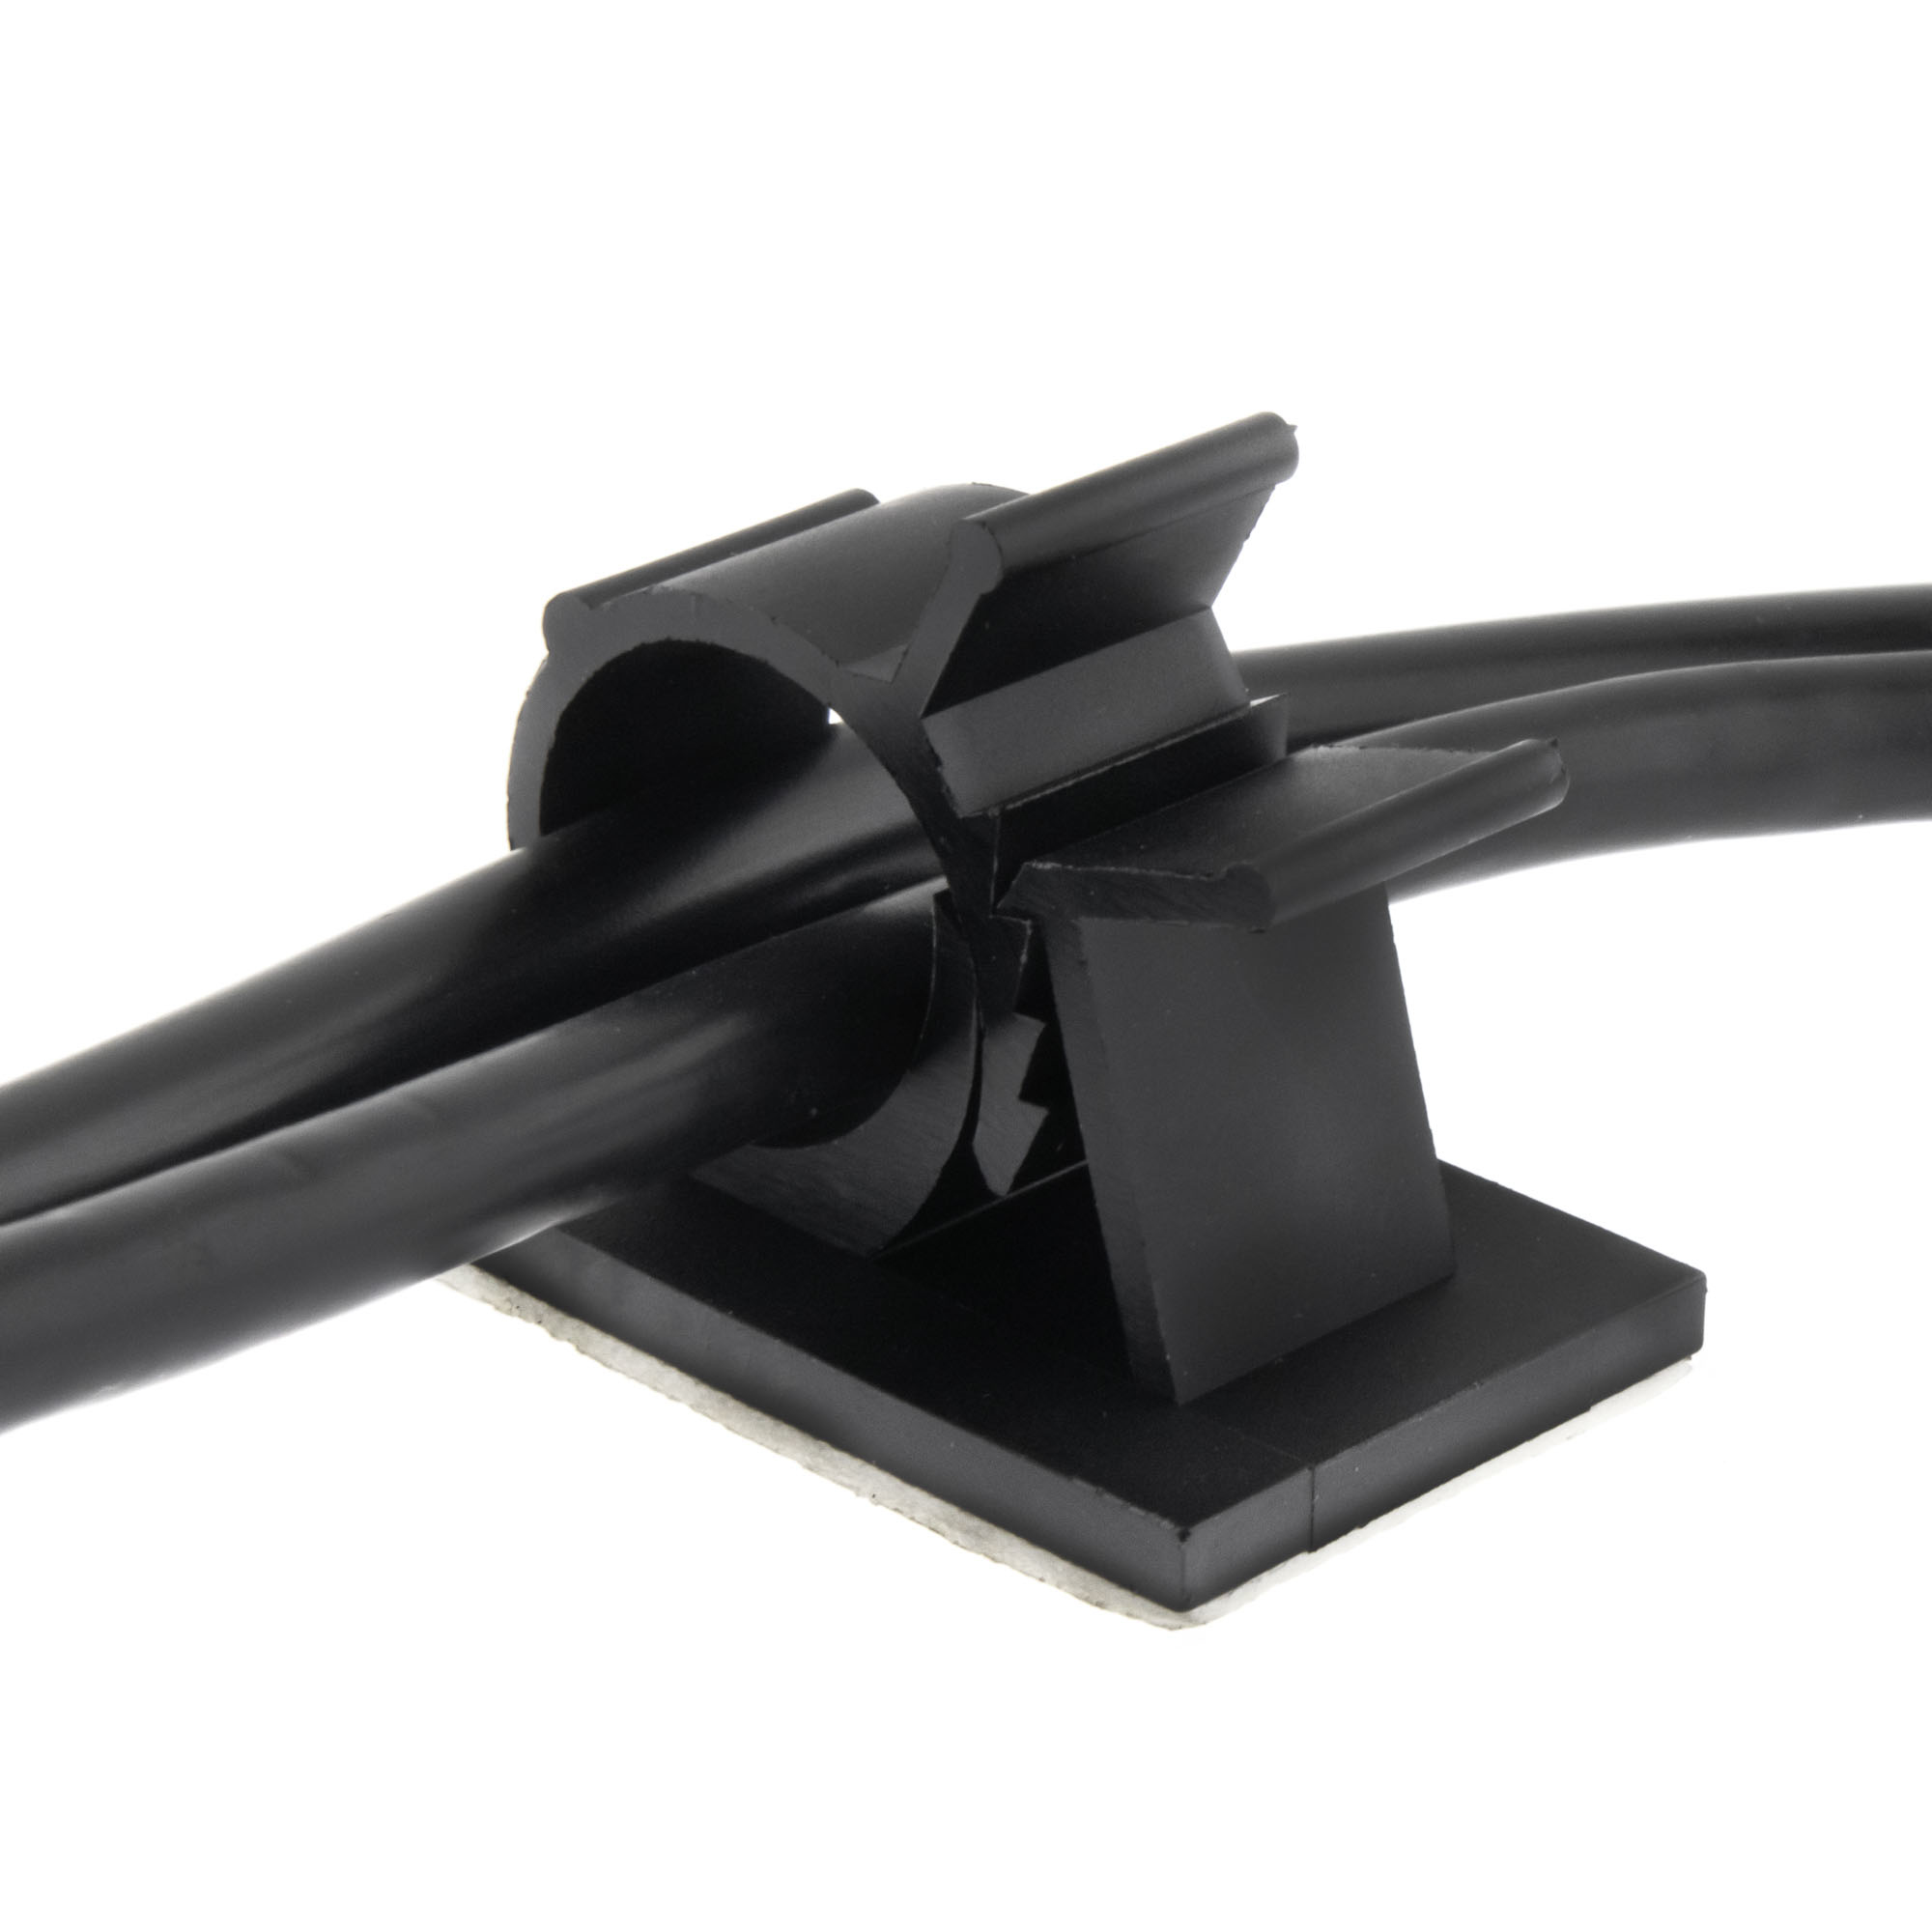 Cable clamp self-adhesive 7,9-10,3mm, black, 50PCS